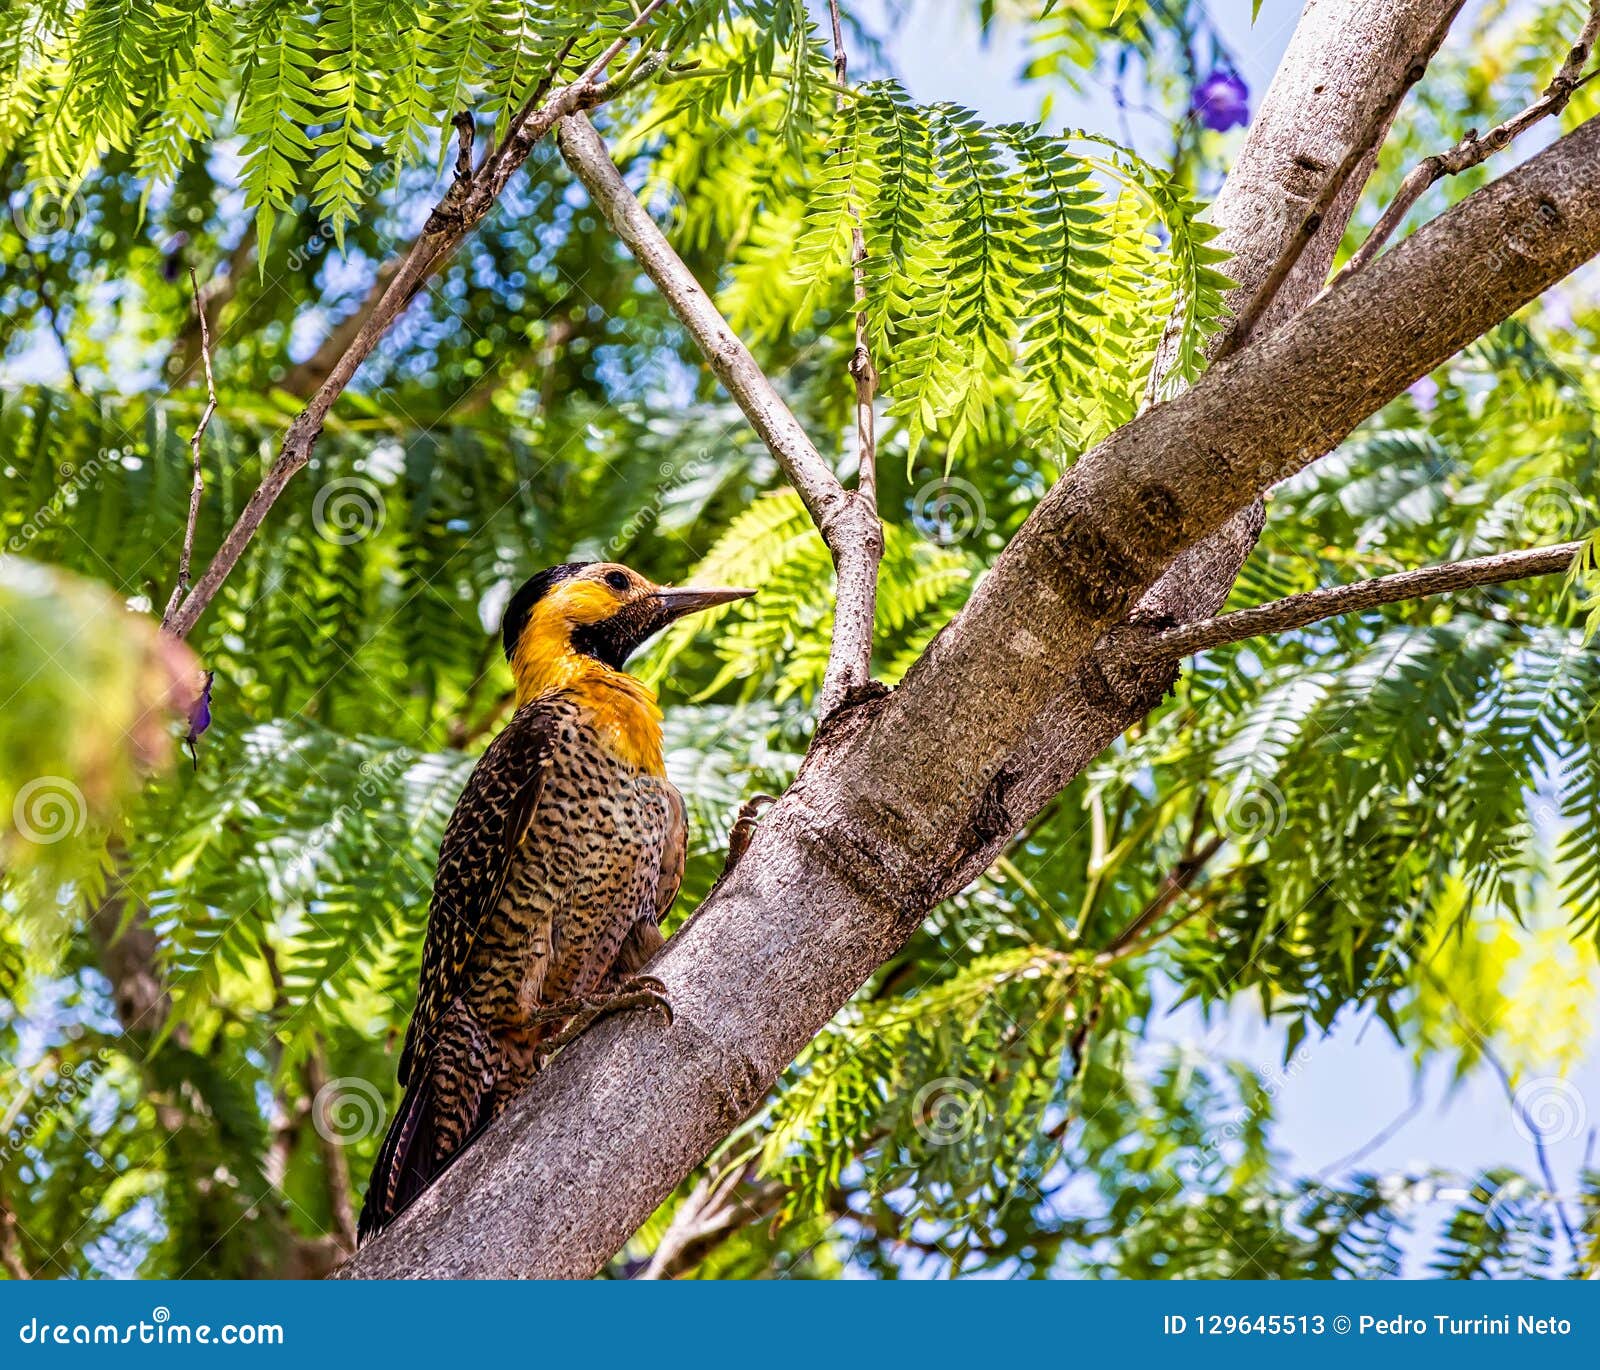 campo flicker woodpecker bird - colaptes campestris - on tree branch